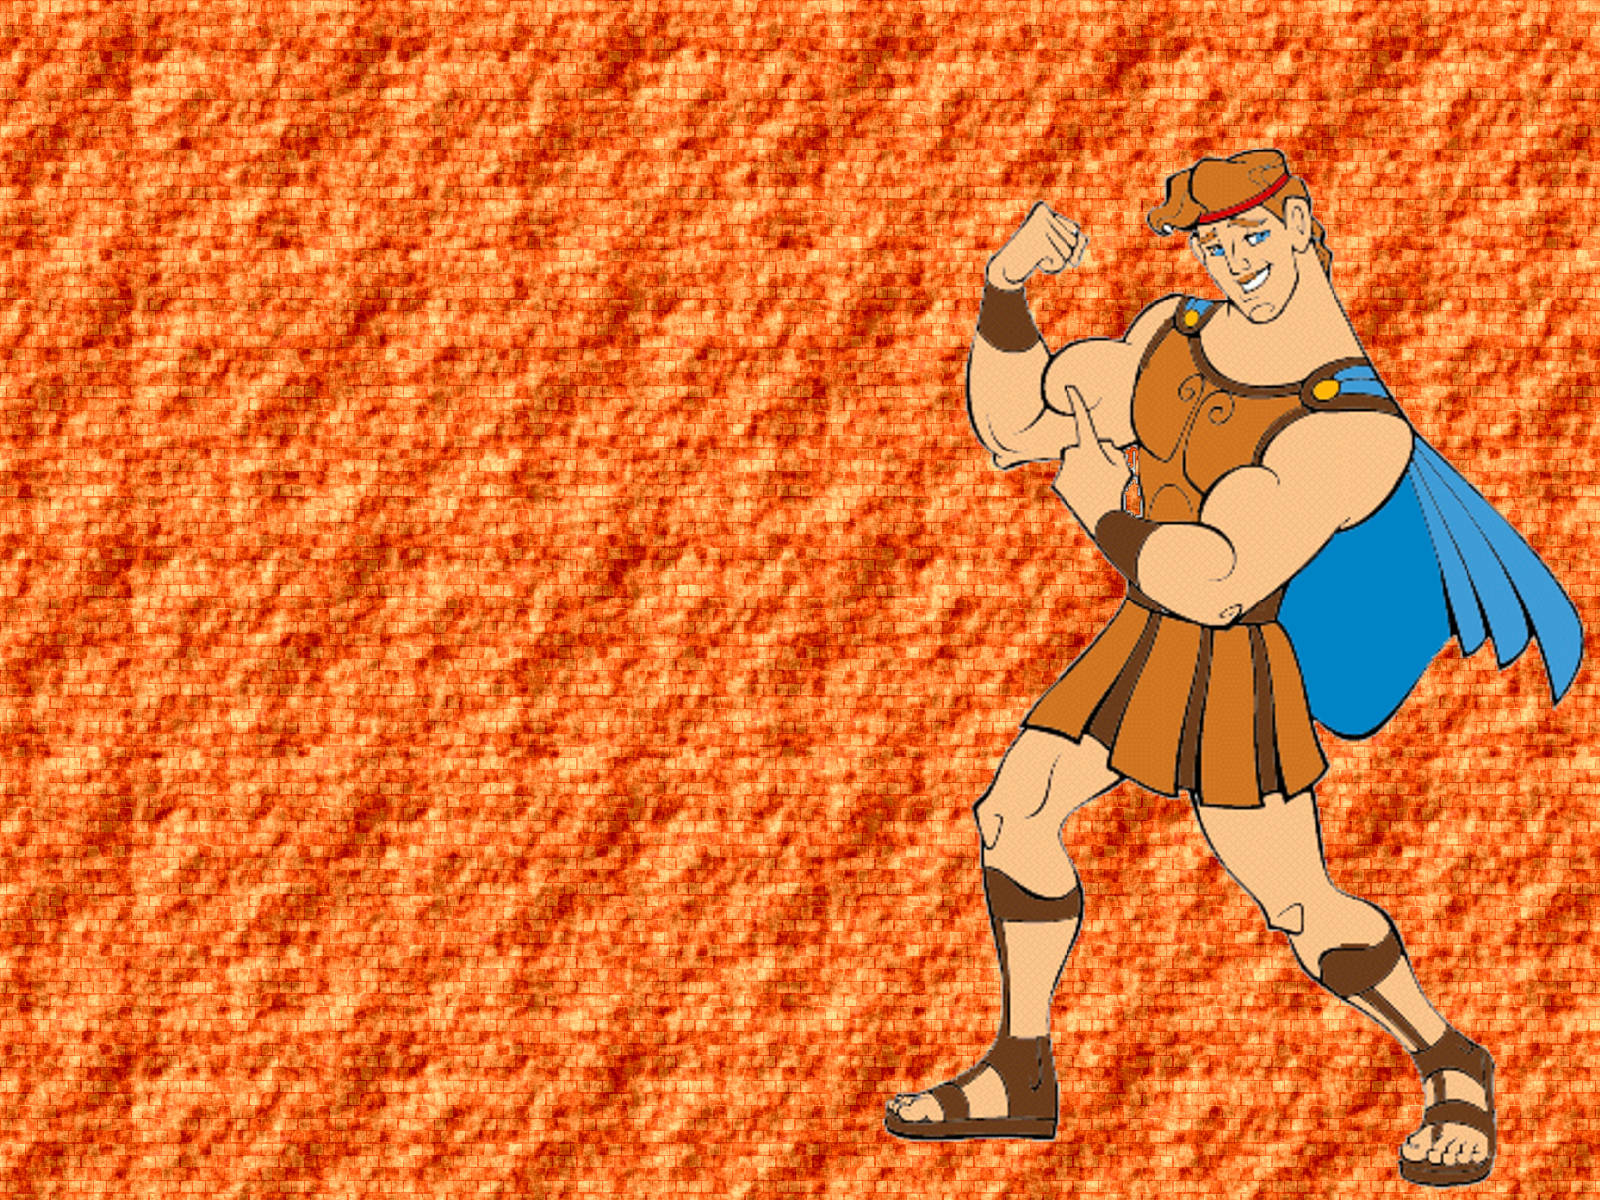 Hercules In Orange Armor Outfit